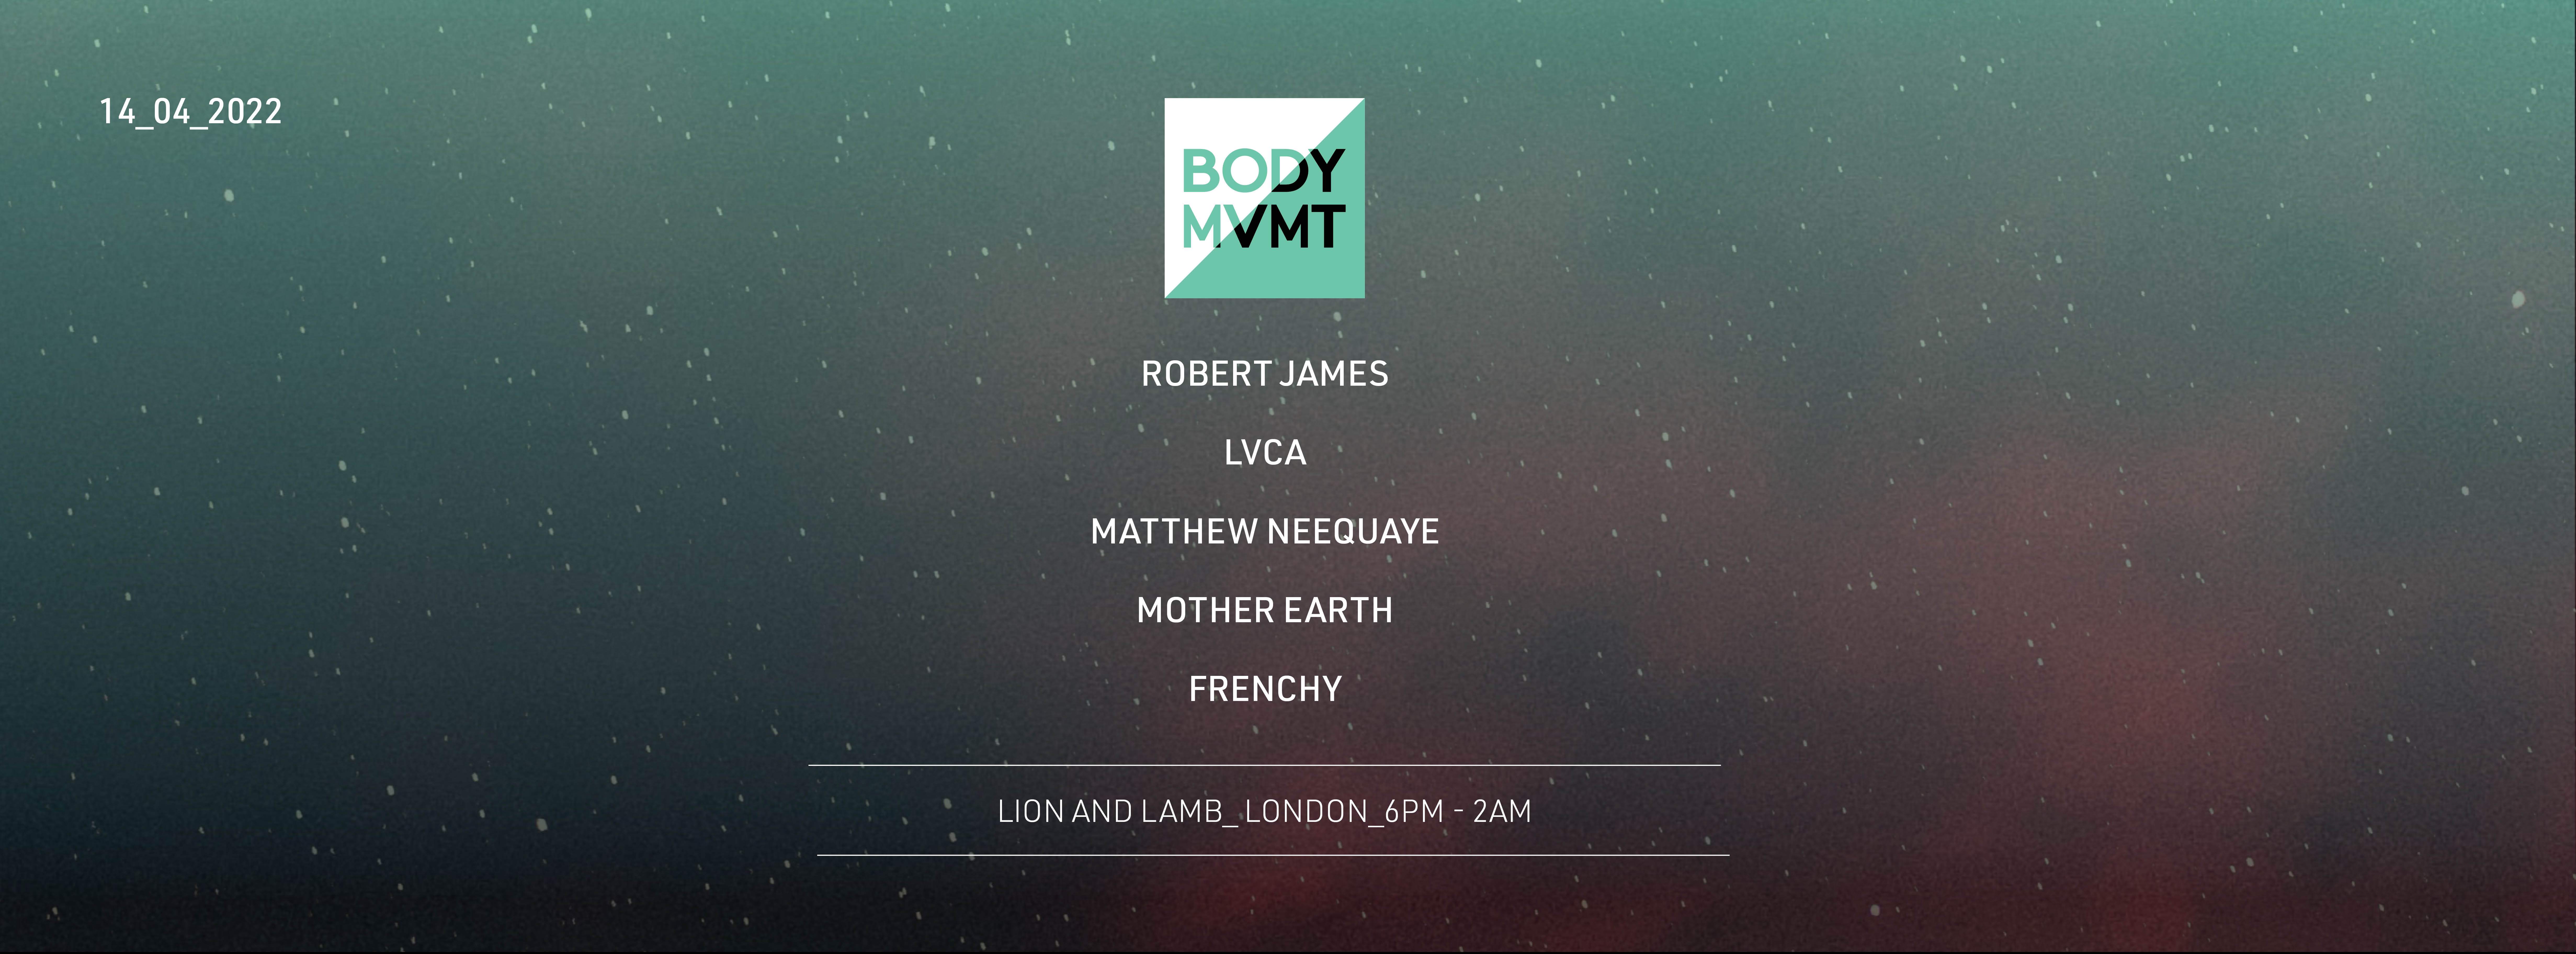 Body Movement with Robert James, LVCA, Matthew Neequaye, Mother Earth and Frenchy - Página trasera